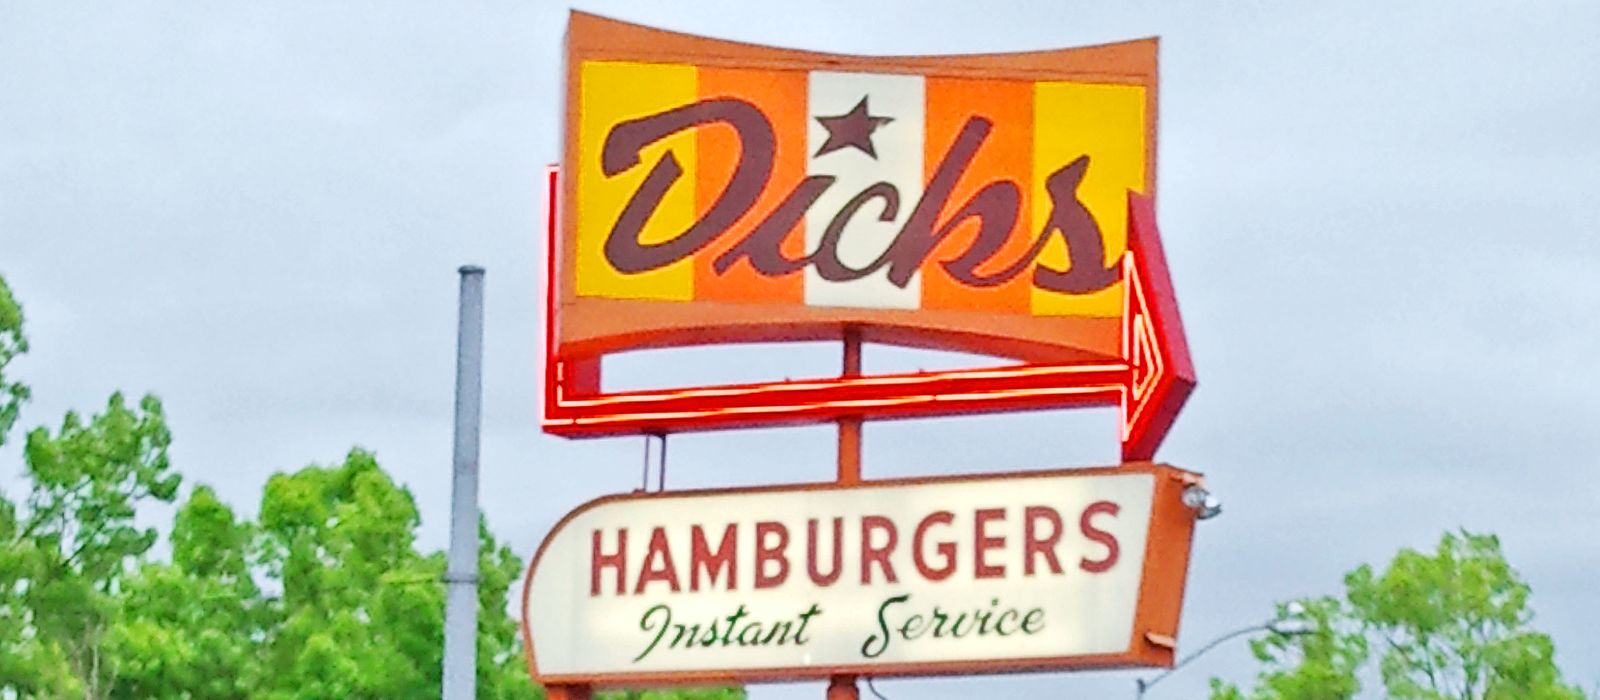 Dicks Burger in Seattle